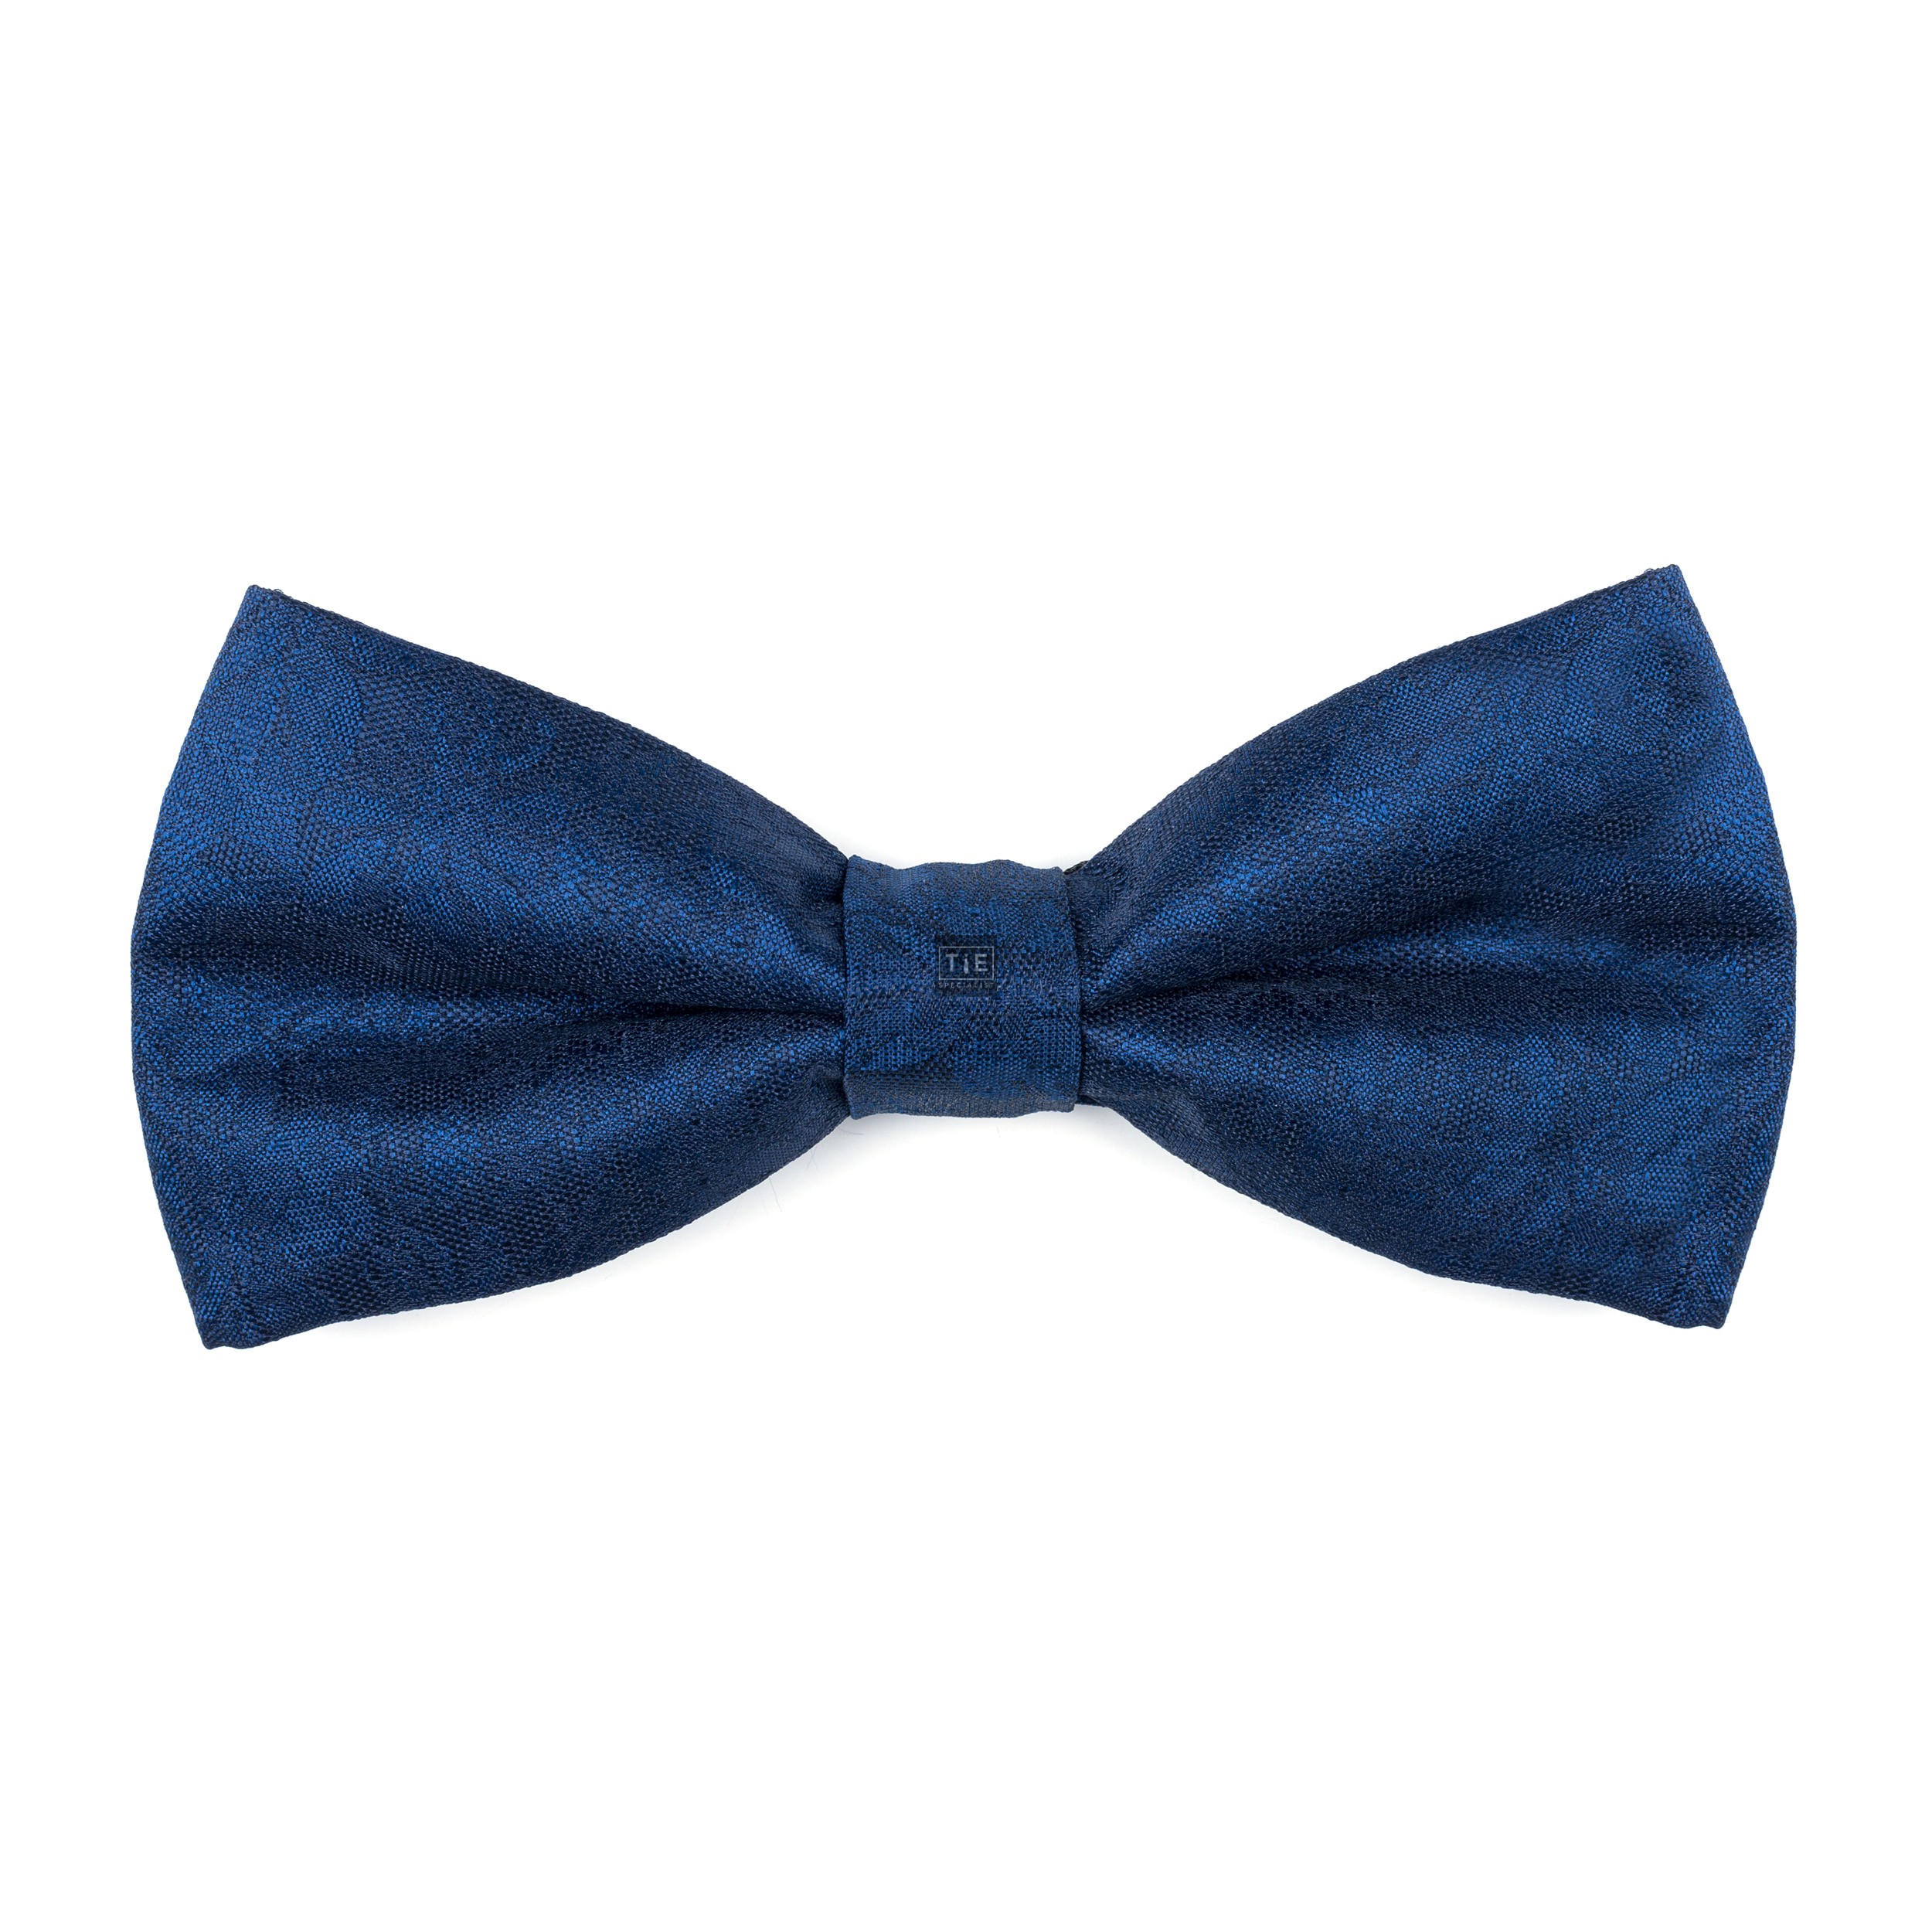 Twilight Blue Floral Bow Tie